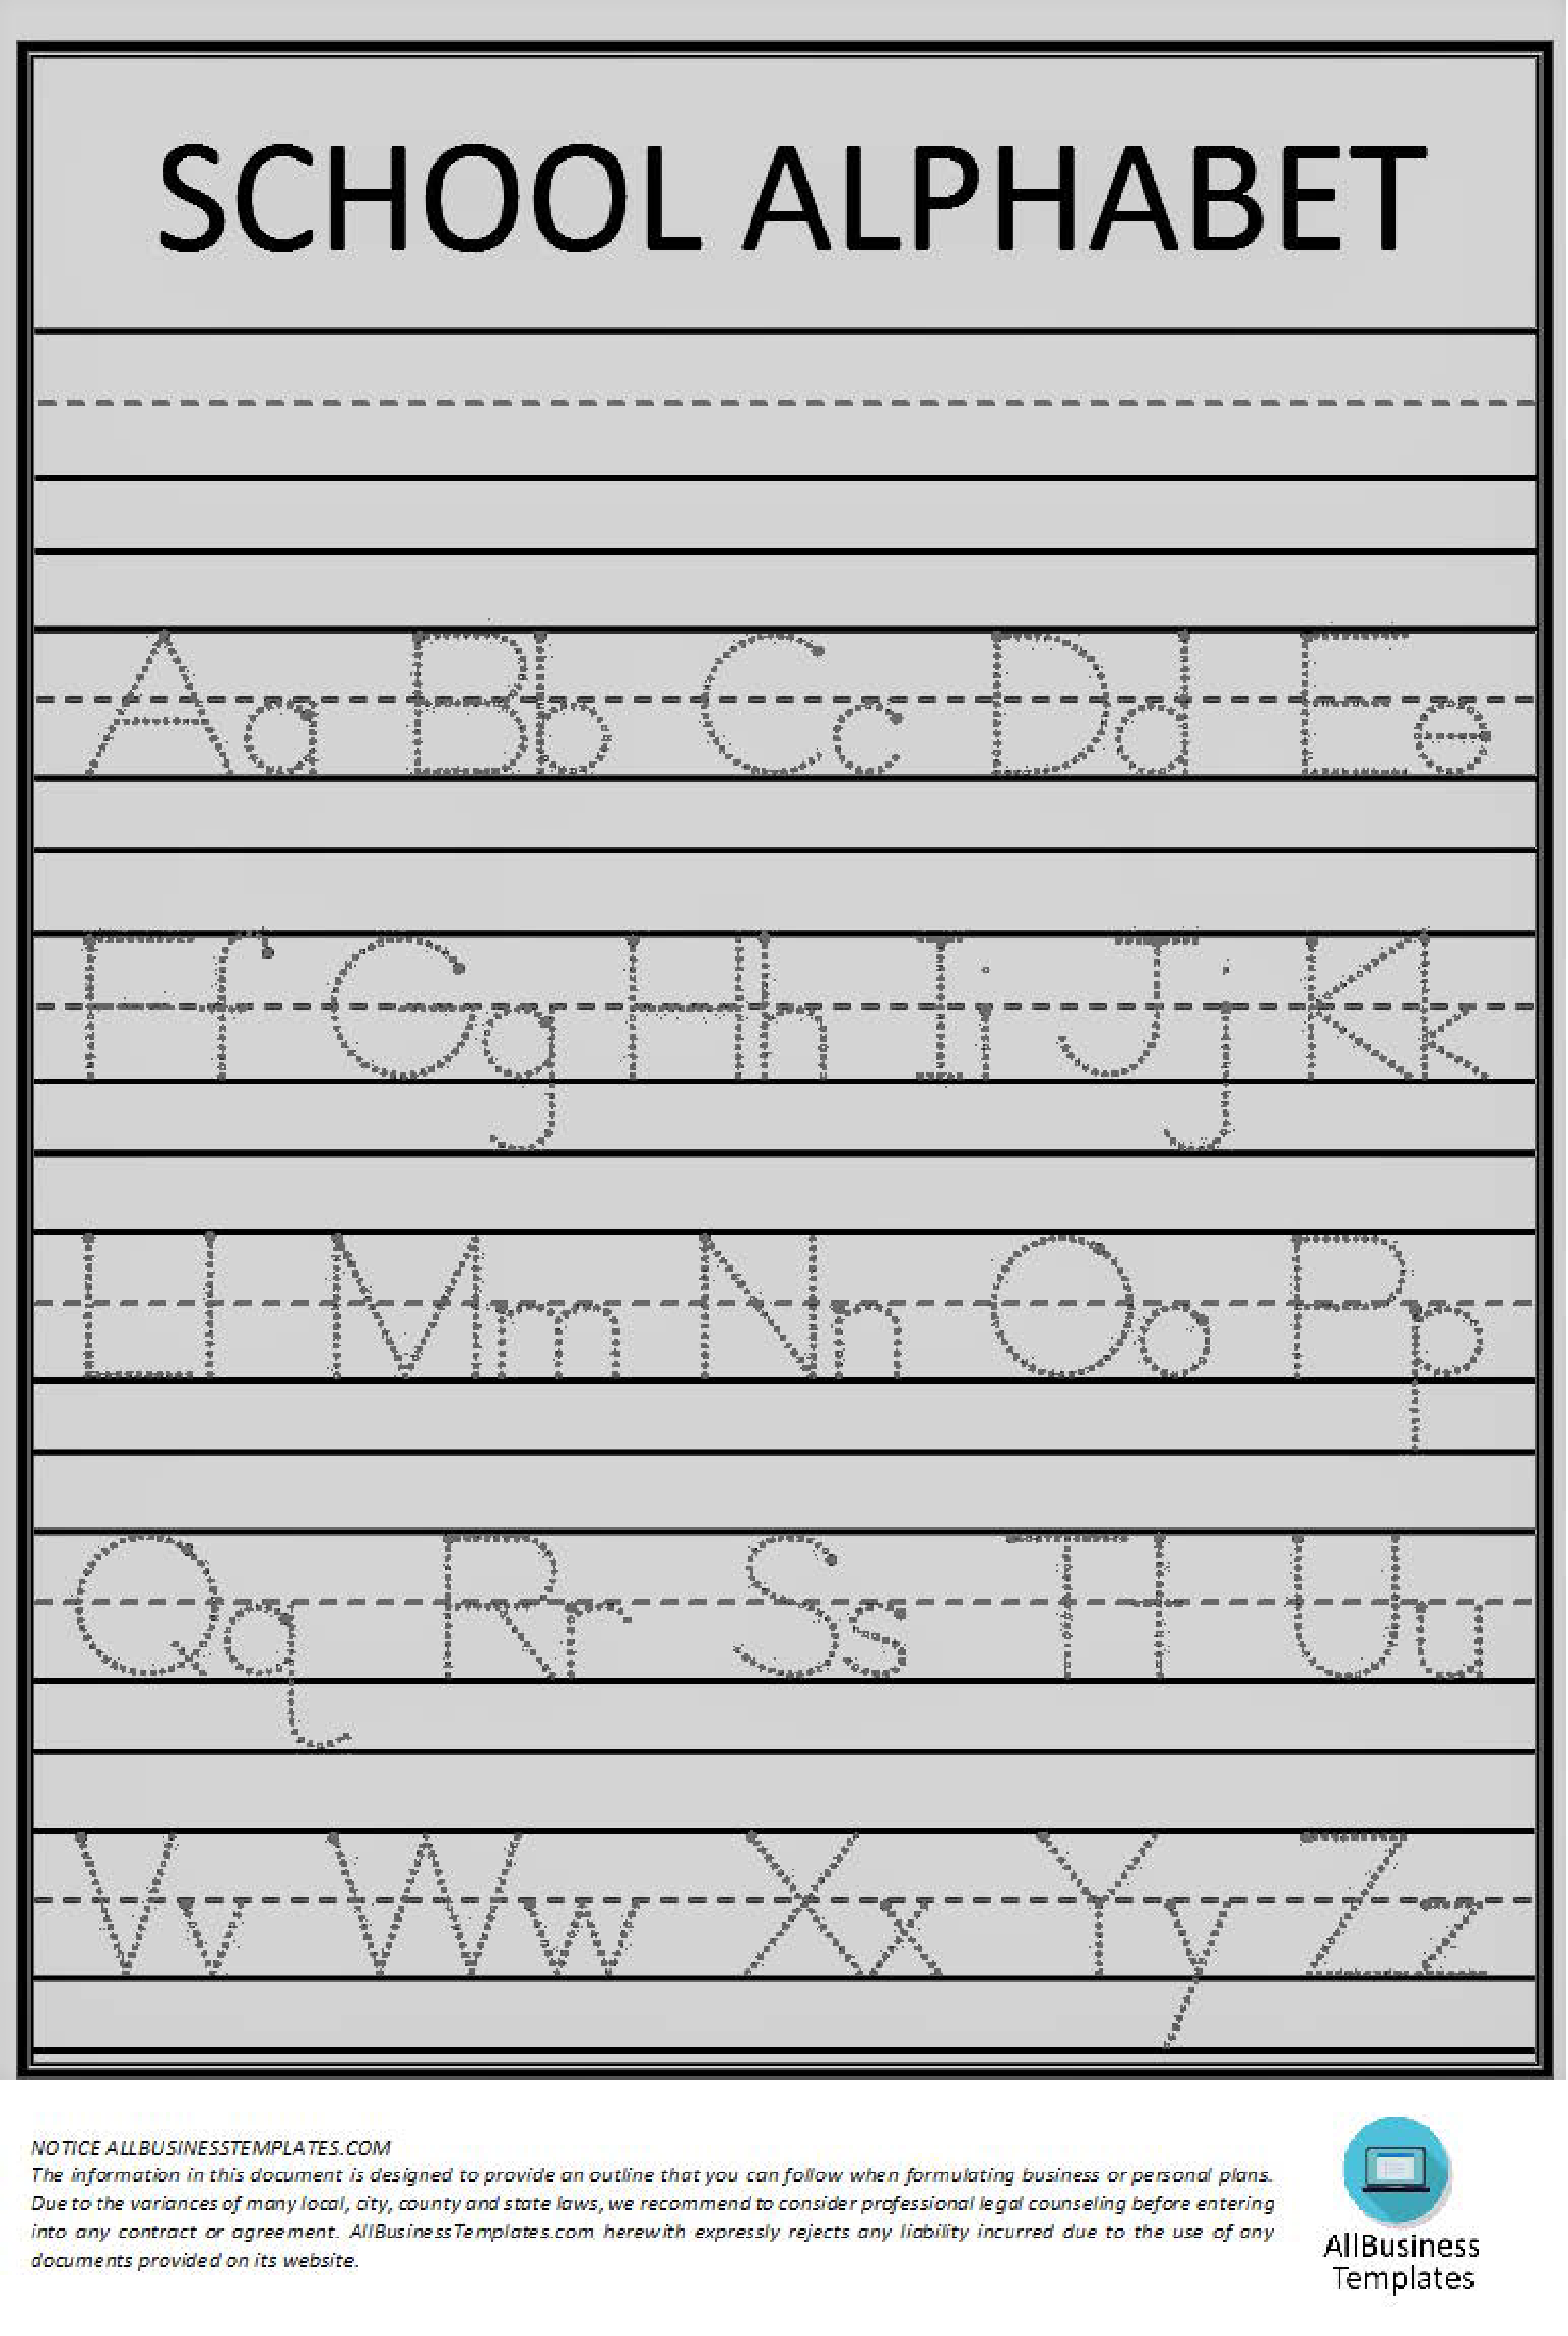 learn-how-to-write-alphabet-preschool-templates-at-allbusinesstemplates